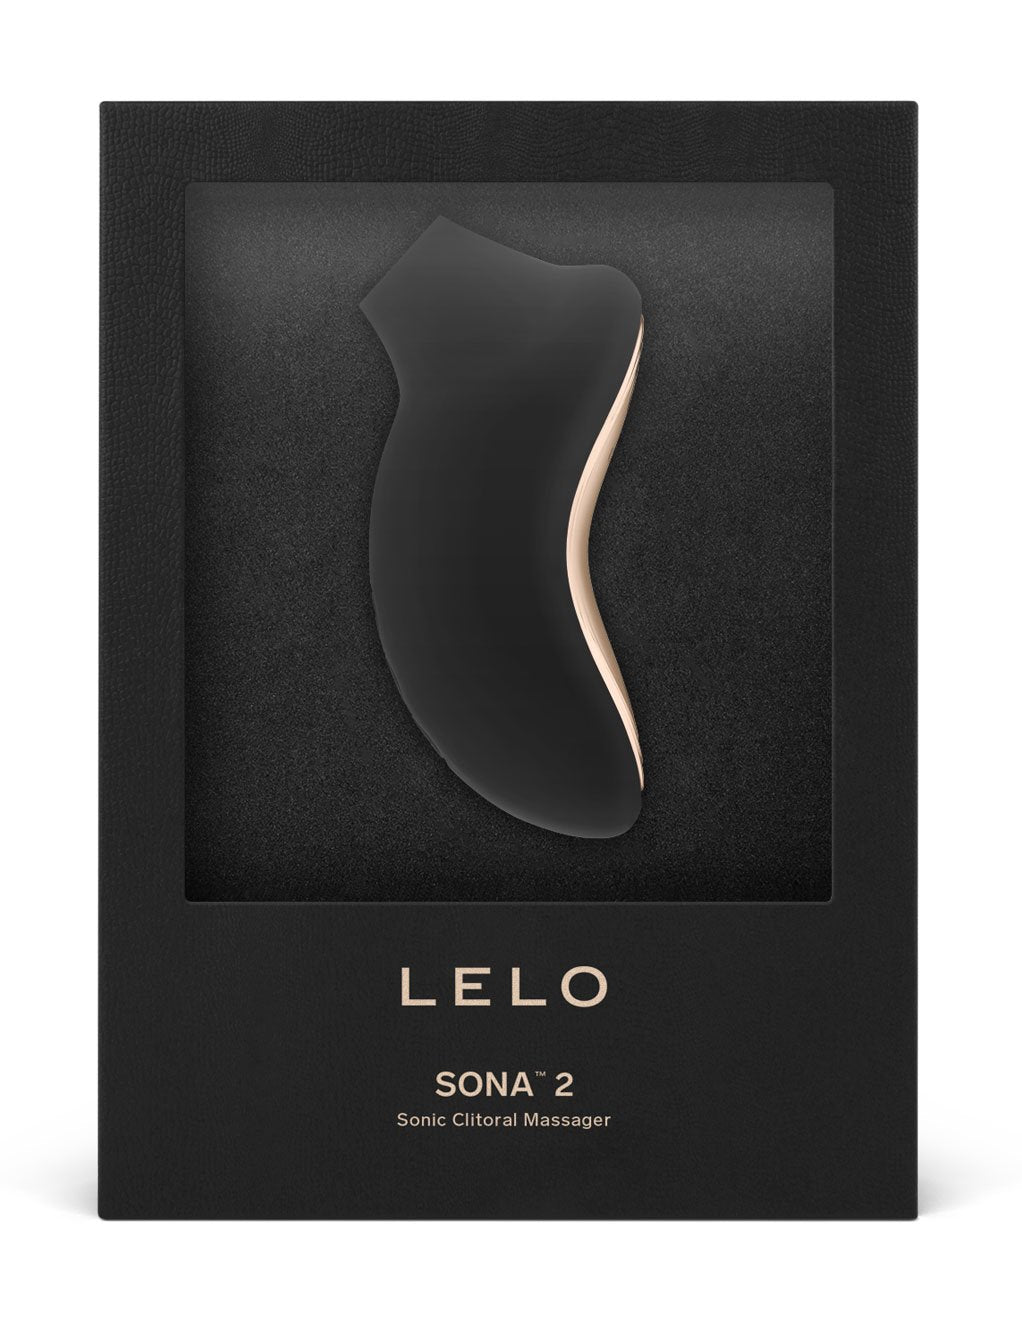 Lelo Sona 2 Sonic Clitoral Massager- Black- Box